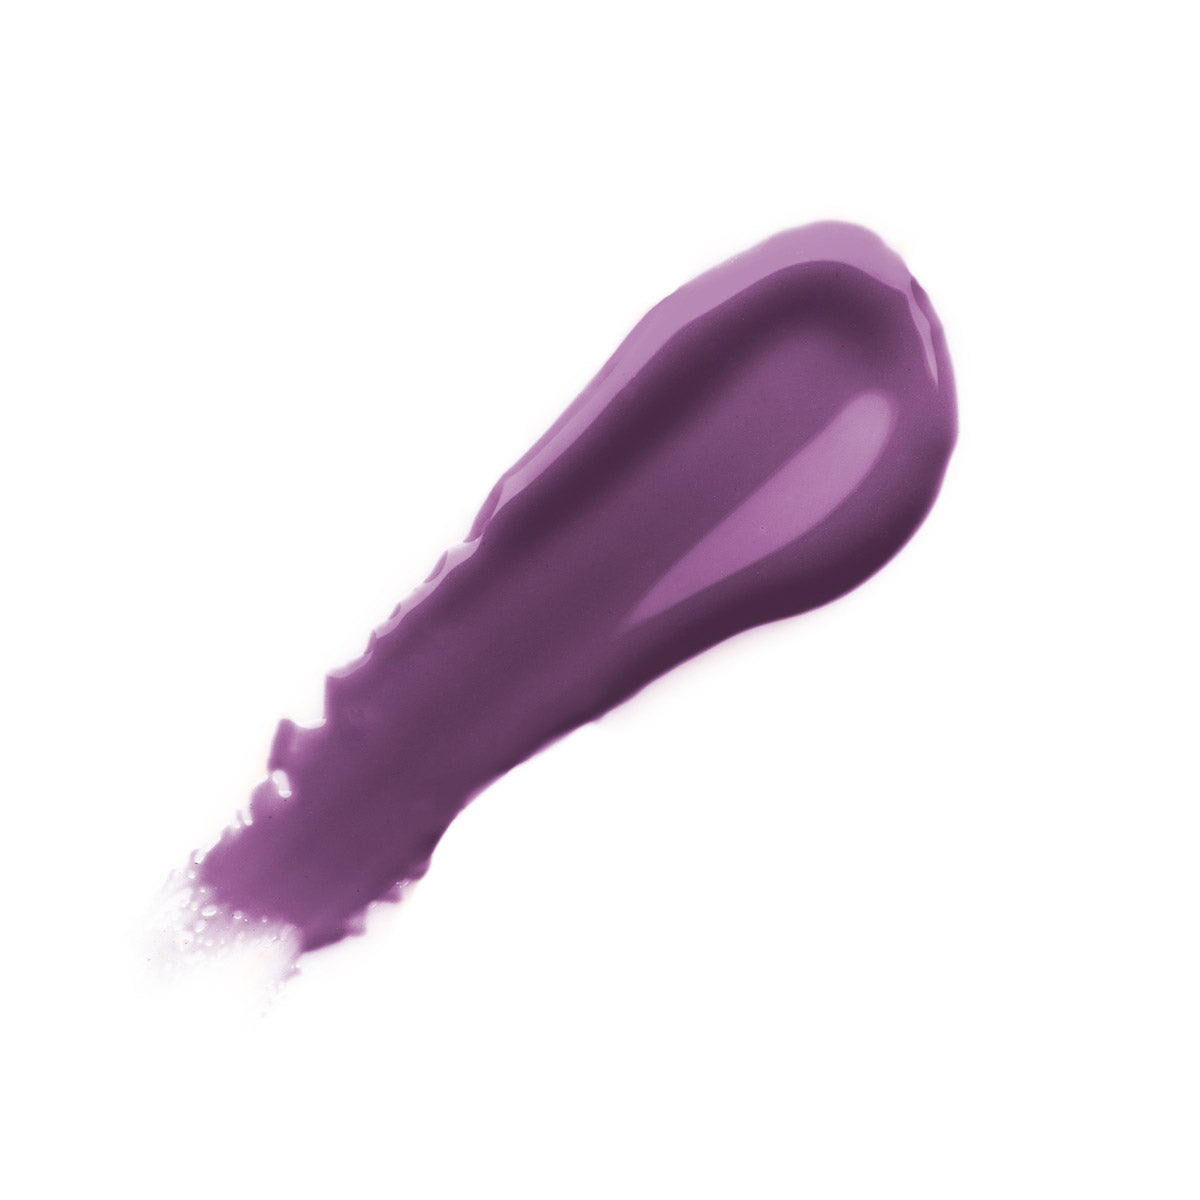 TRES CHIC - SHEER DARK VIOLET - high shine lip gloss in sheer dark violet shade